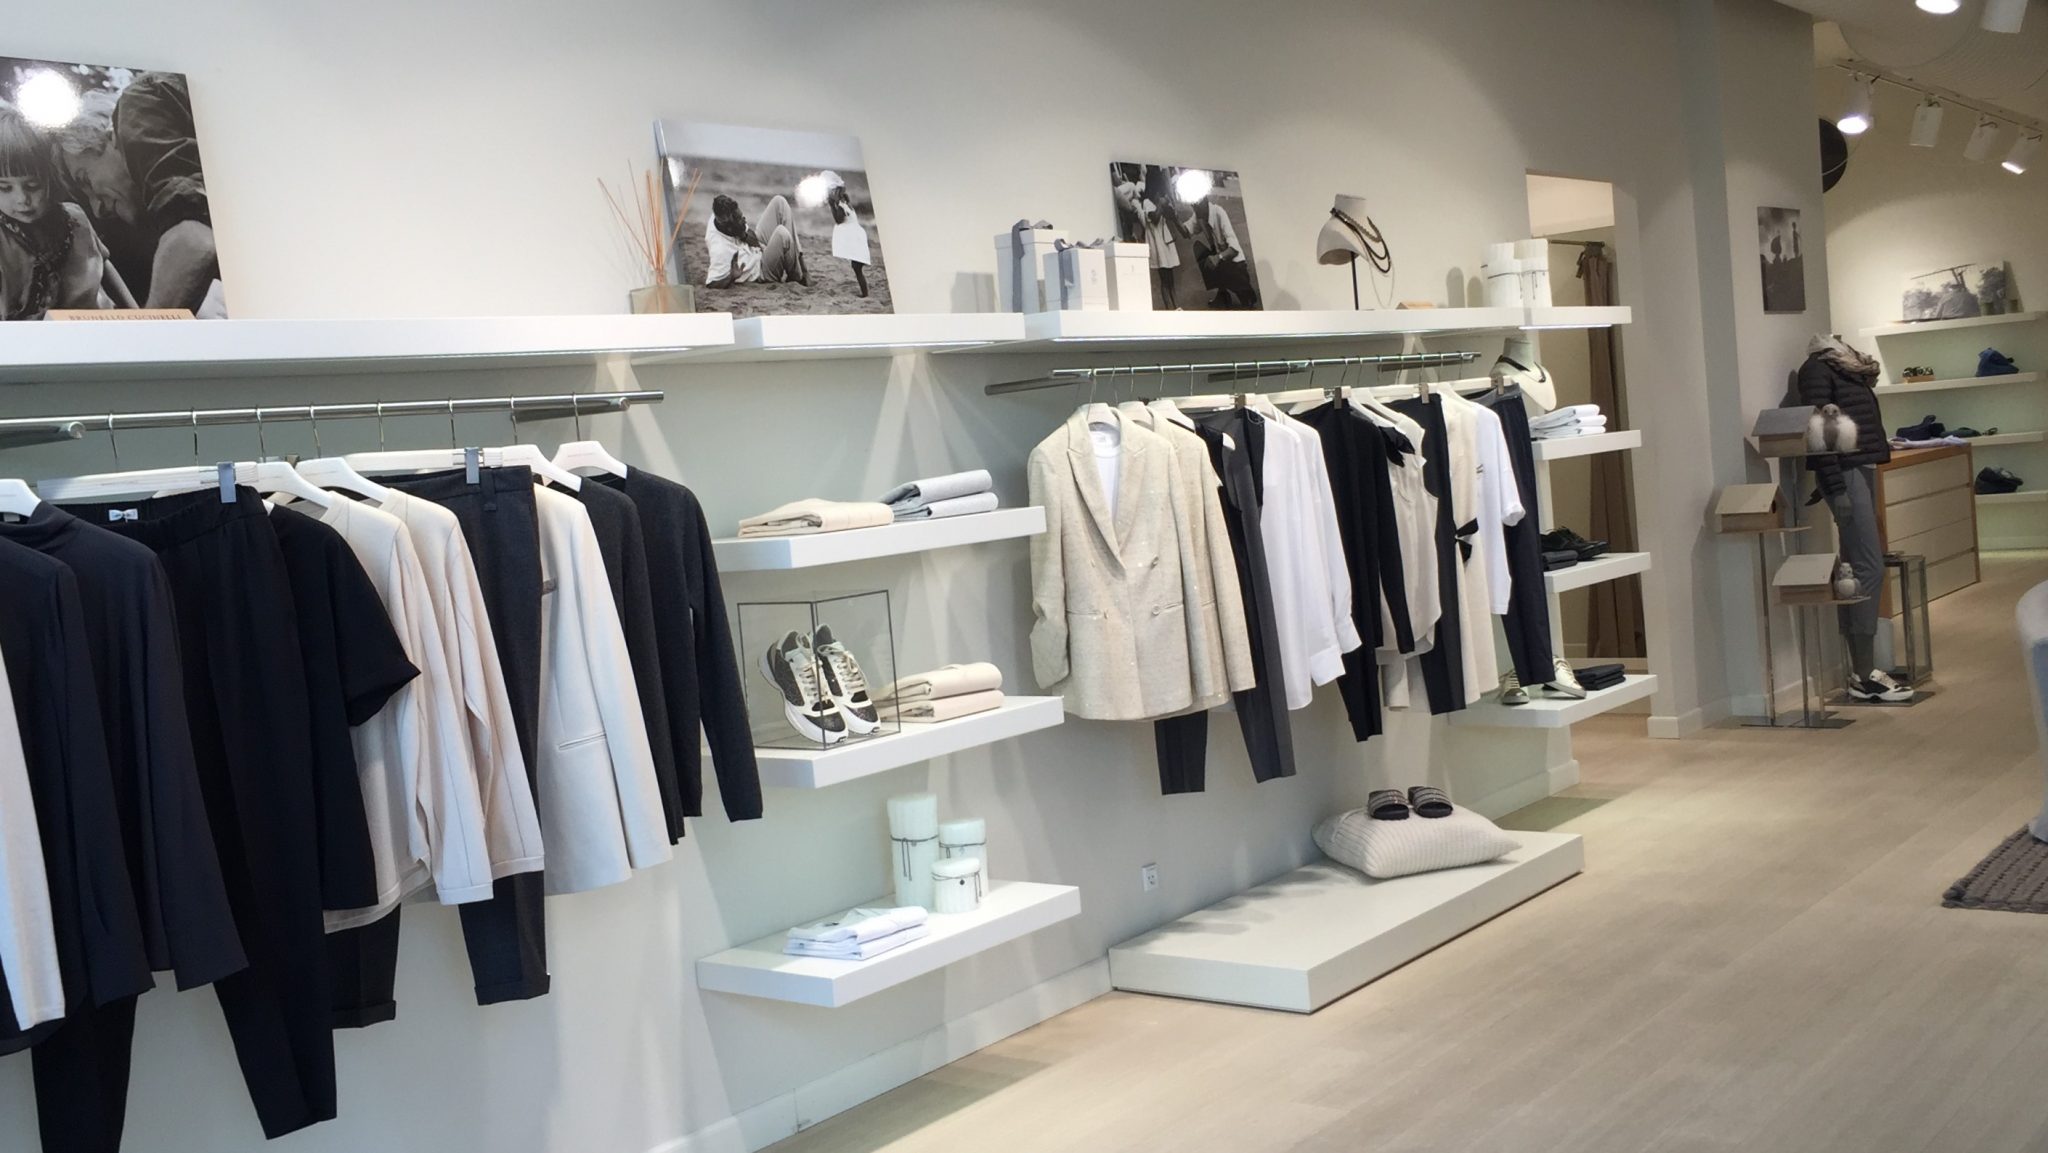 Kopenhagen | Inspiratiereis Retail Design, part 1 - Inspiratiereizen